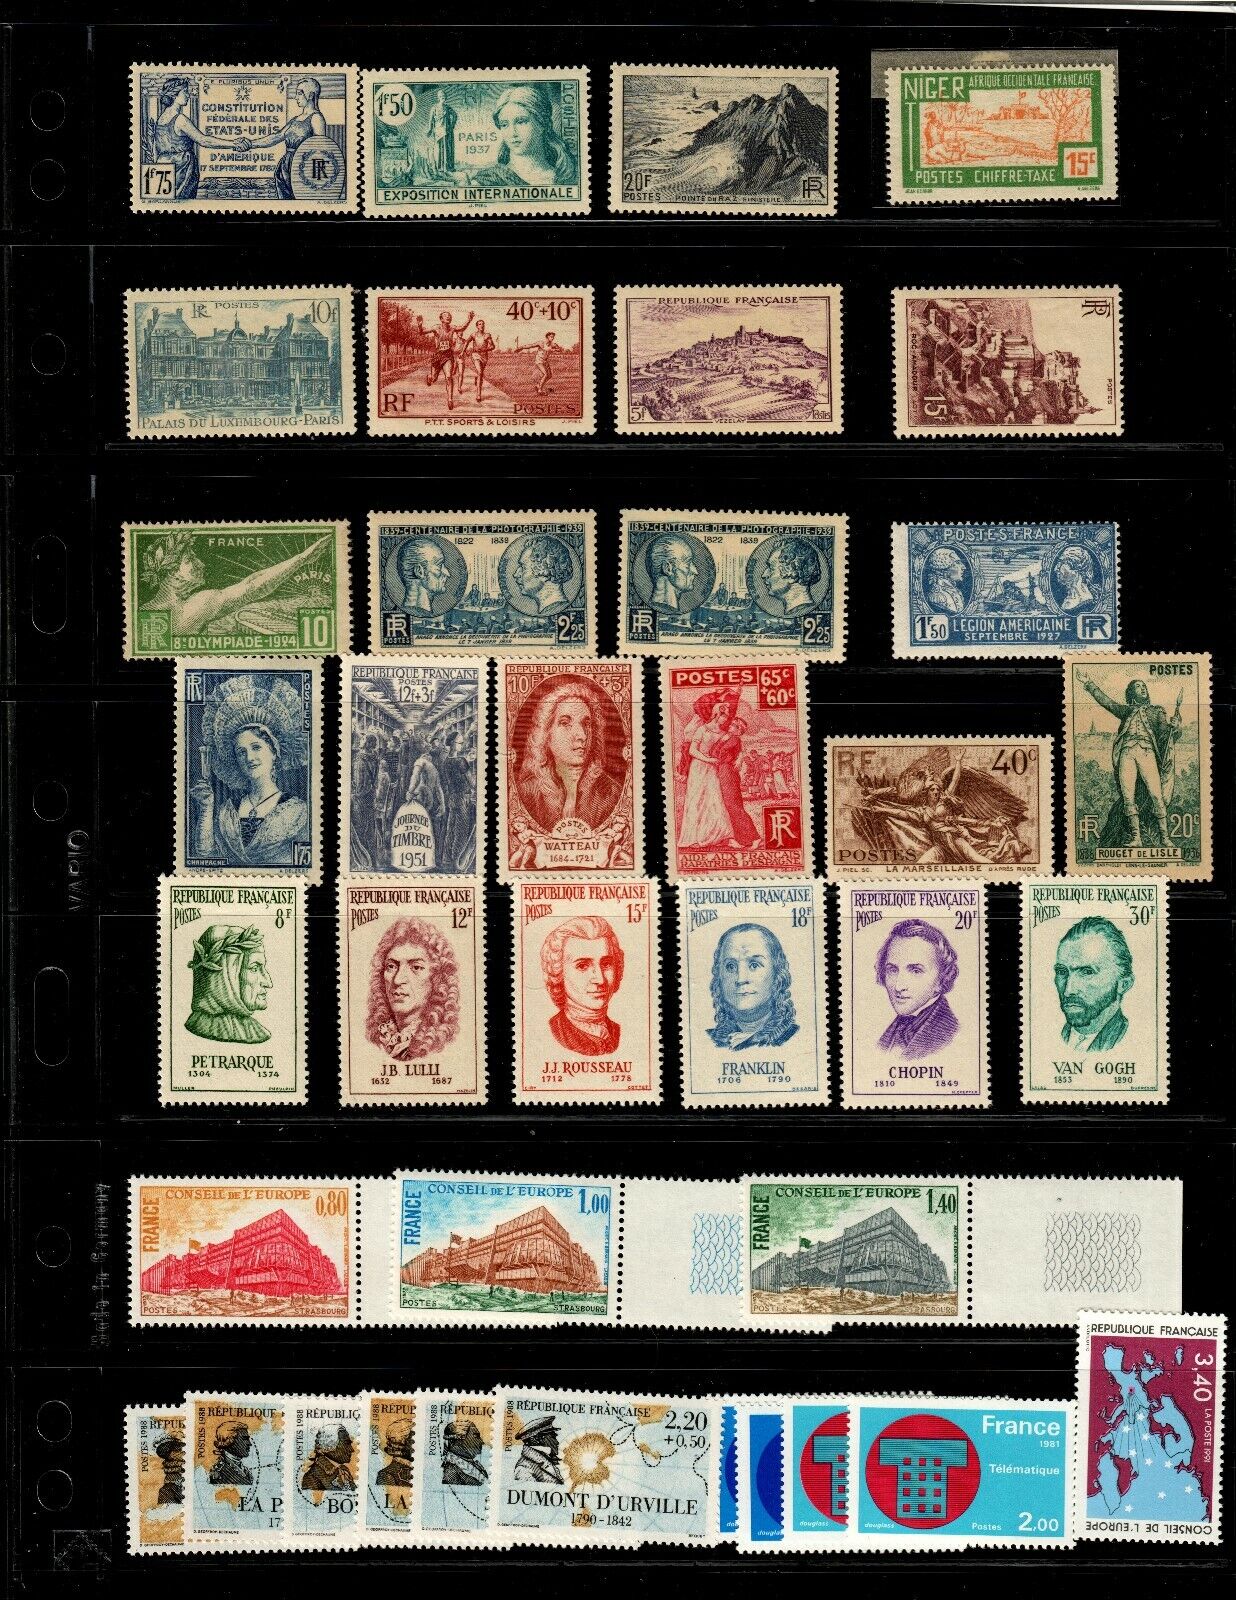 France/Colonies Mint OG Large Lot of 1,000+ stamps from 1927-1990 (CV $1,000+)